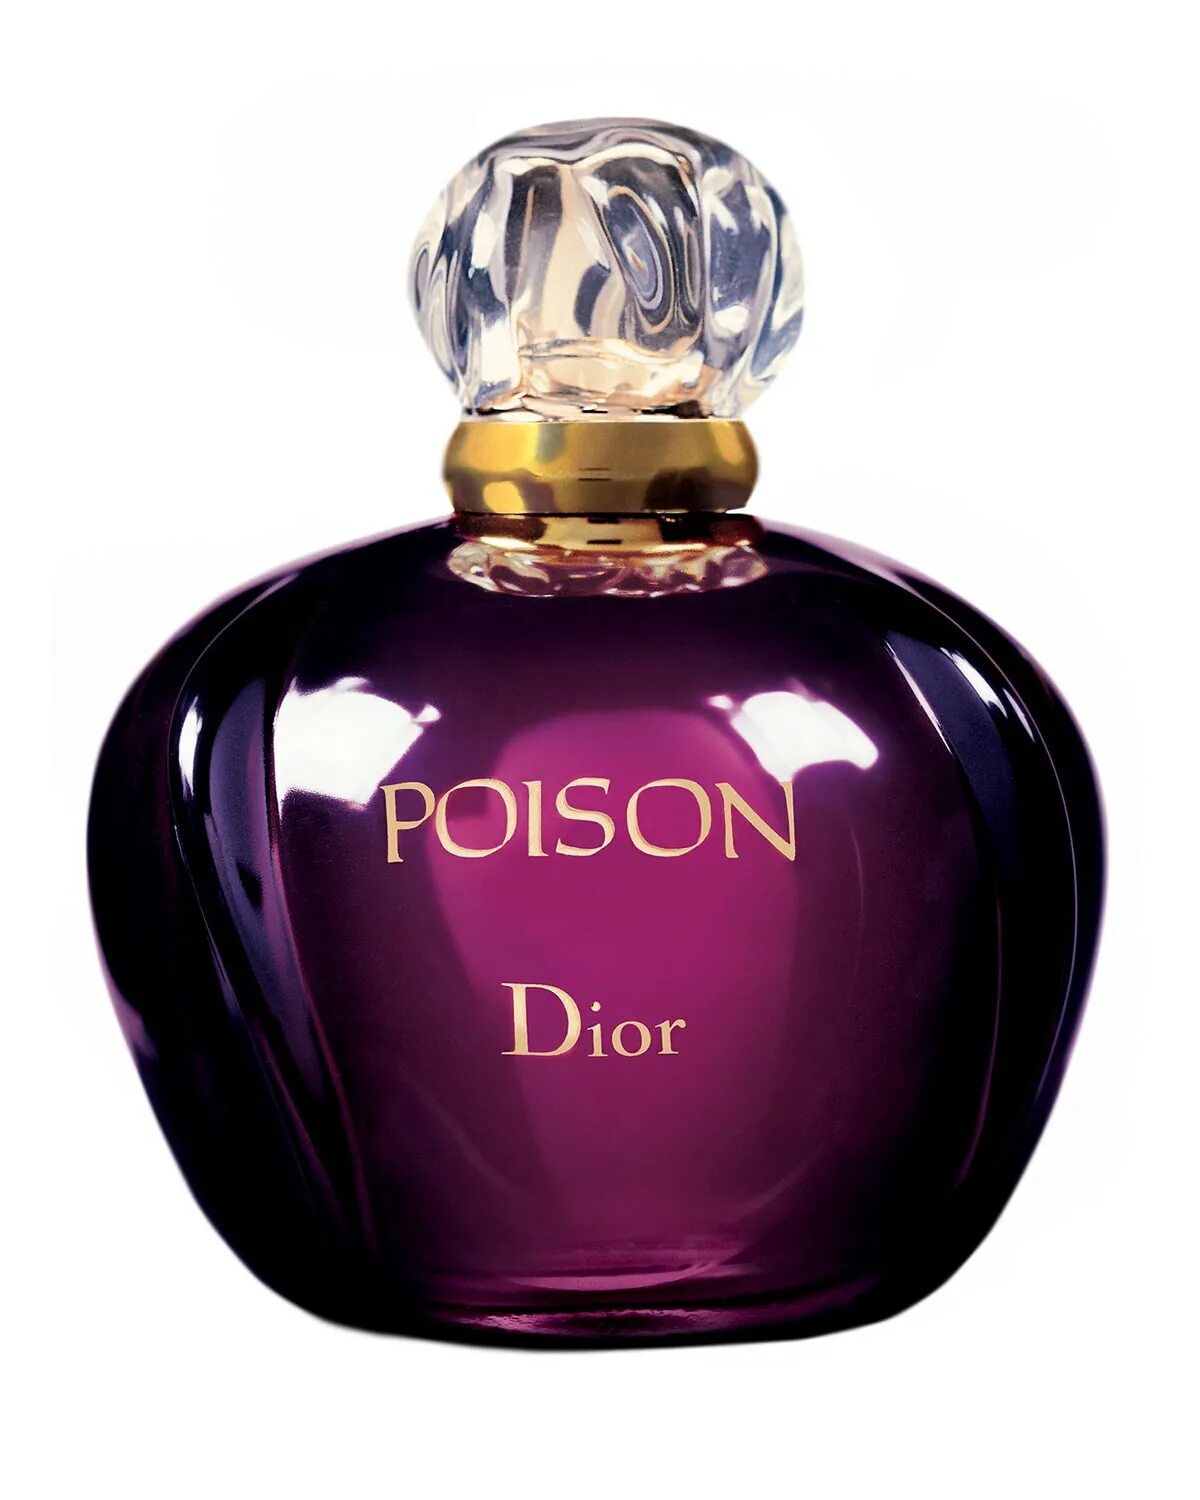 Духи пойзон. Кристиан диор духи женские пуазон. Кристиан диор духи Поисон. Dior Poison EDT 100ml. Dior Poison EDT 50ml.